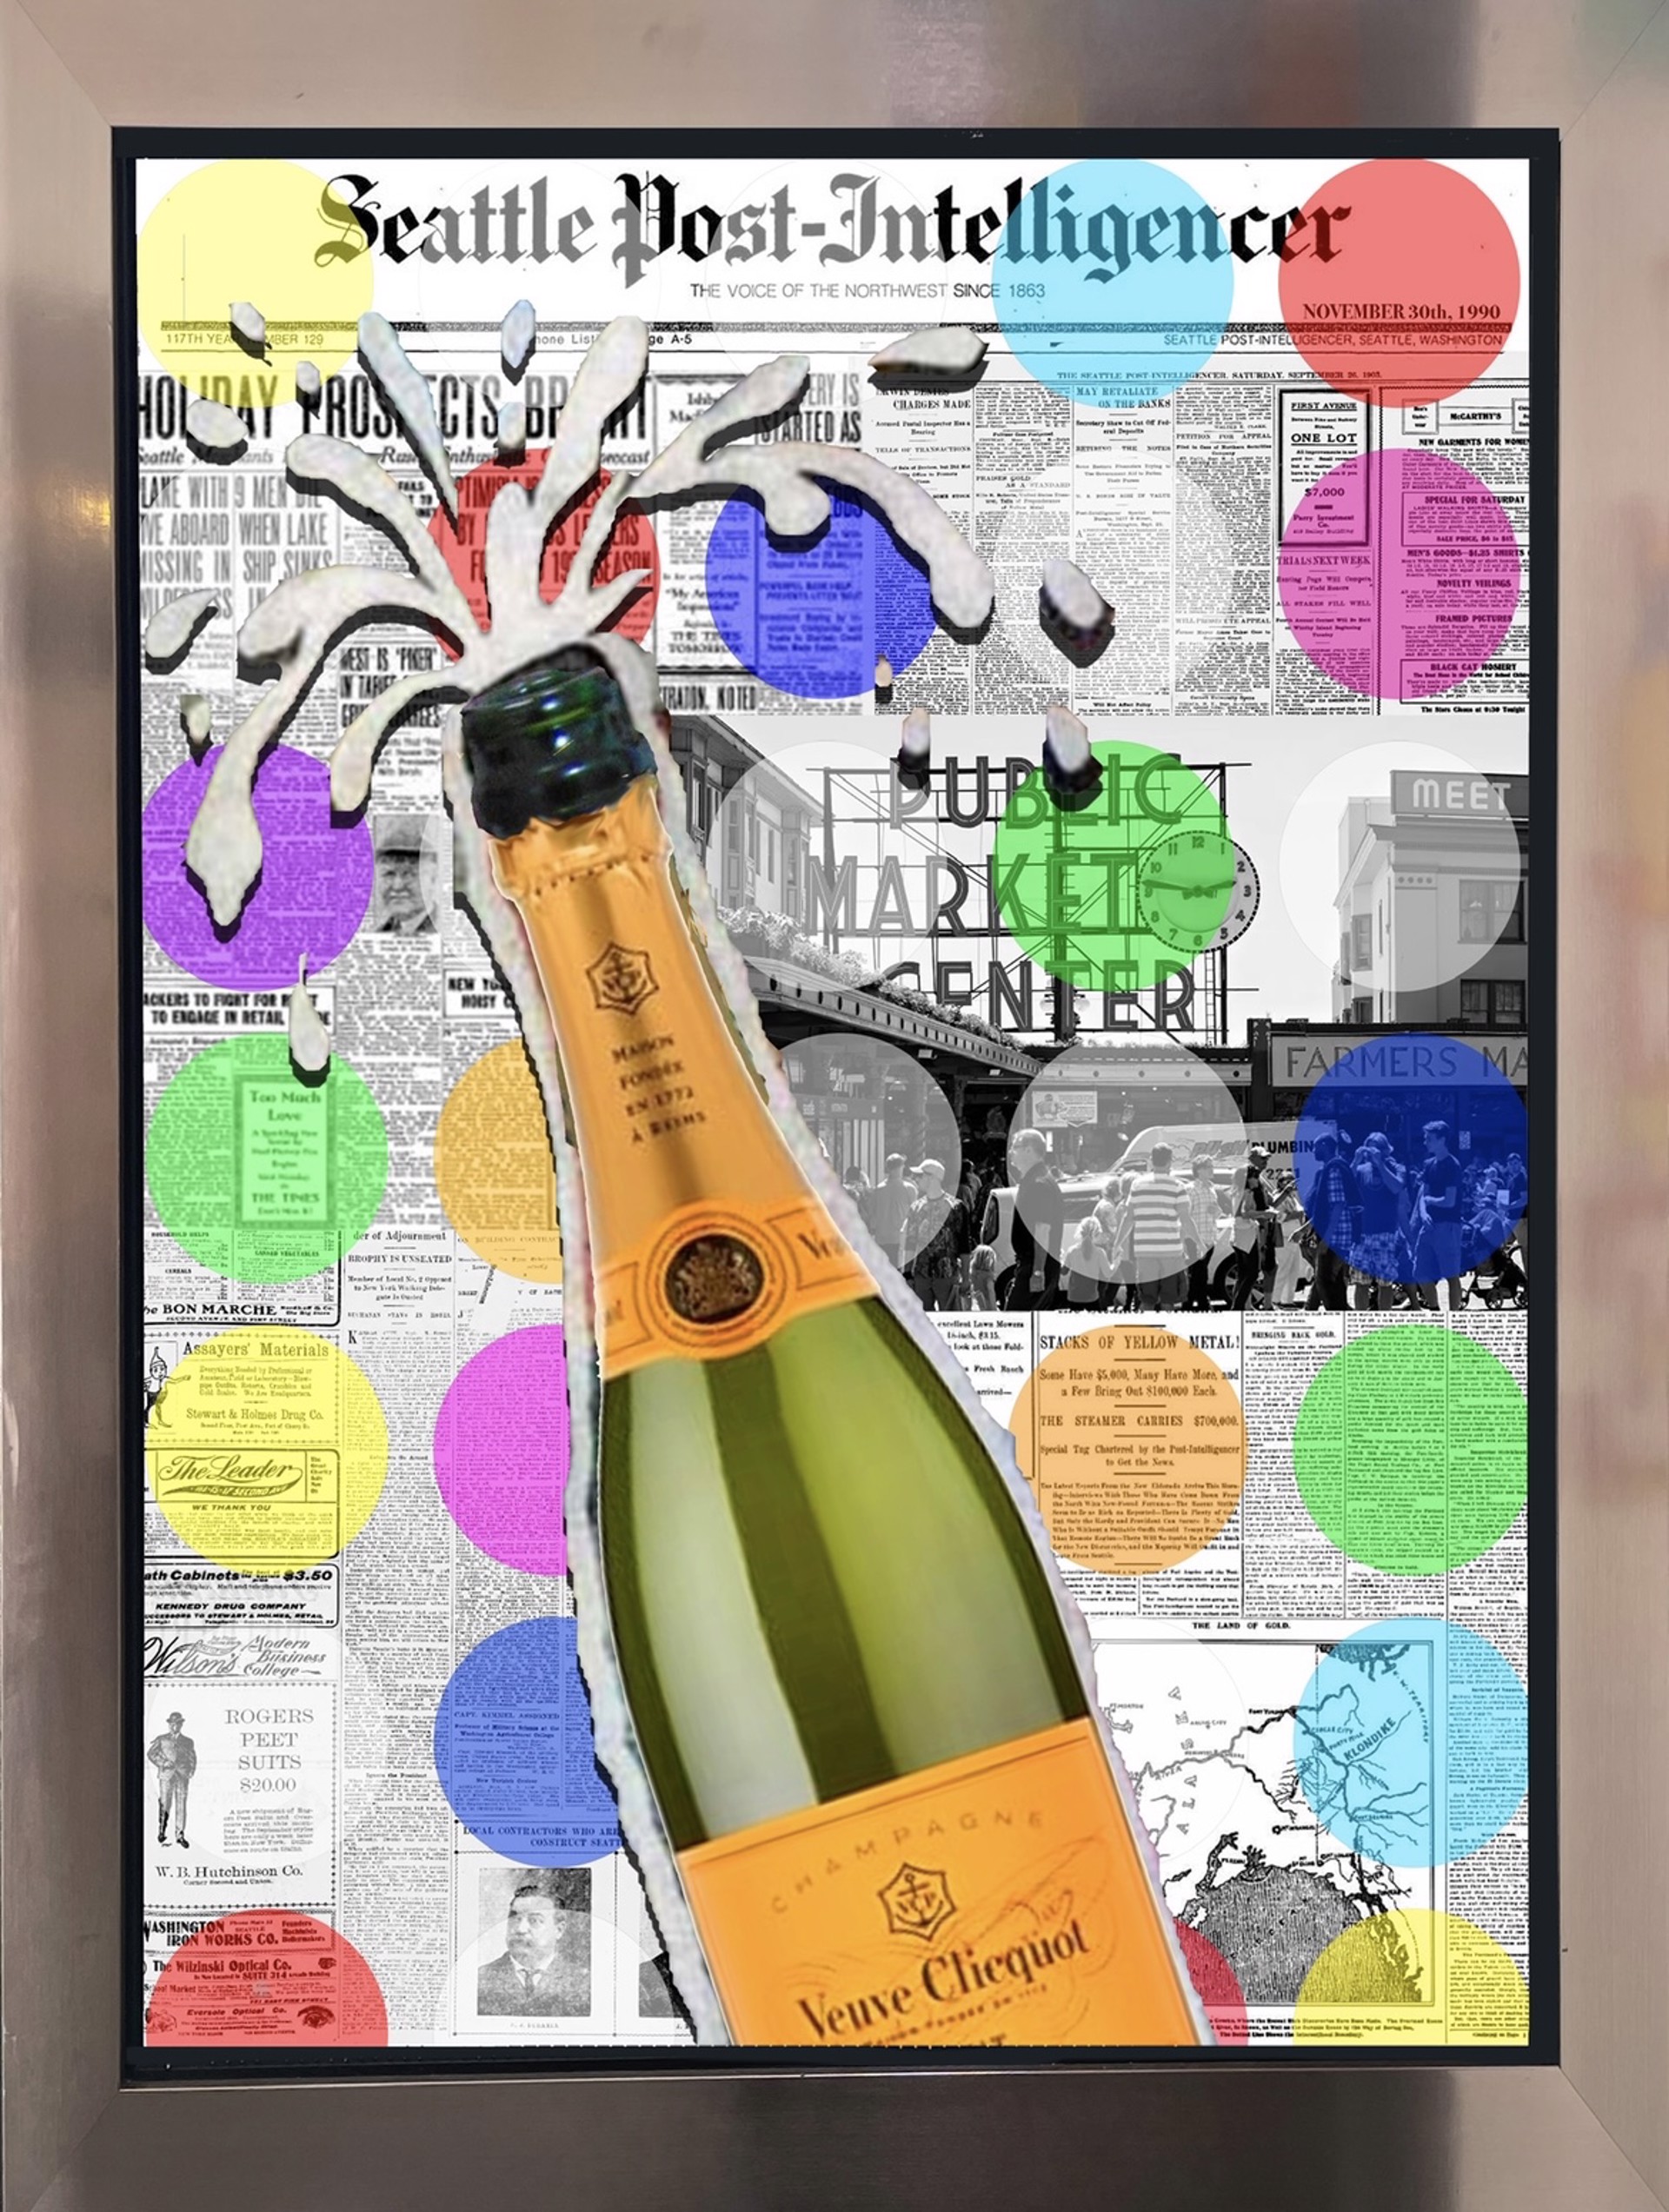 Custom "Champagne Veueve" by WSJ Series on Newspaper by Elena Bulatova